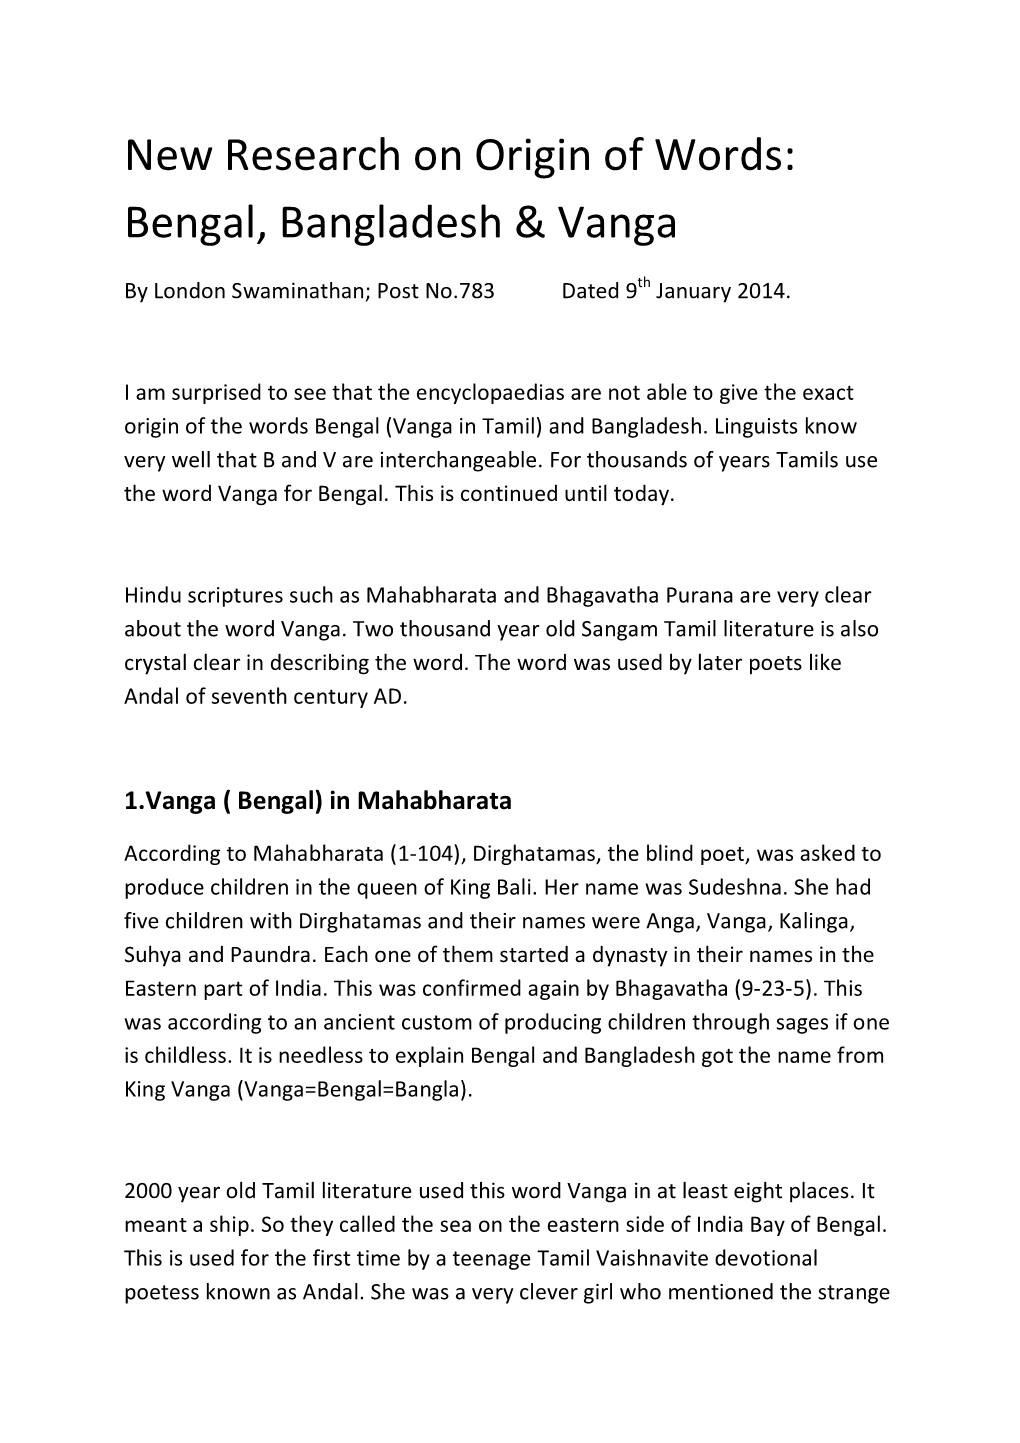 New Research on Origin of Words: Bengal, Bangladesh & Vanga